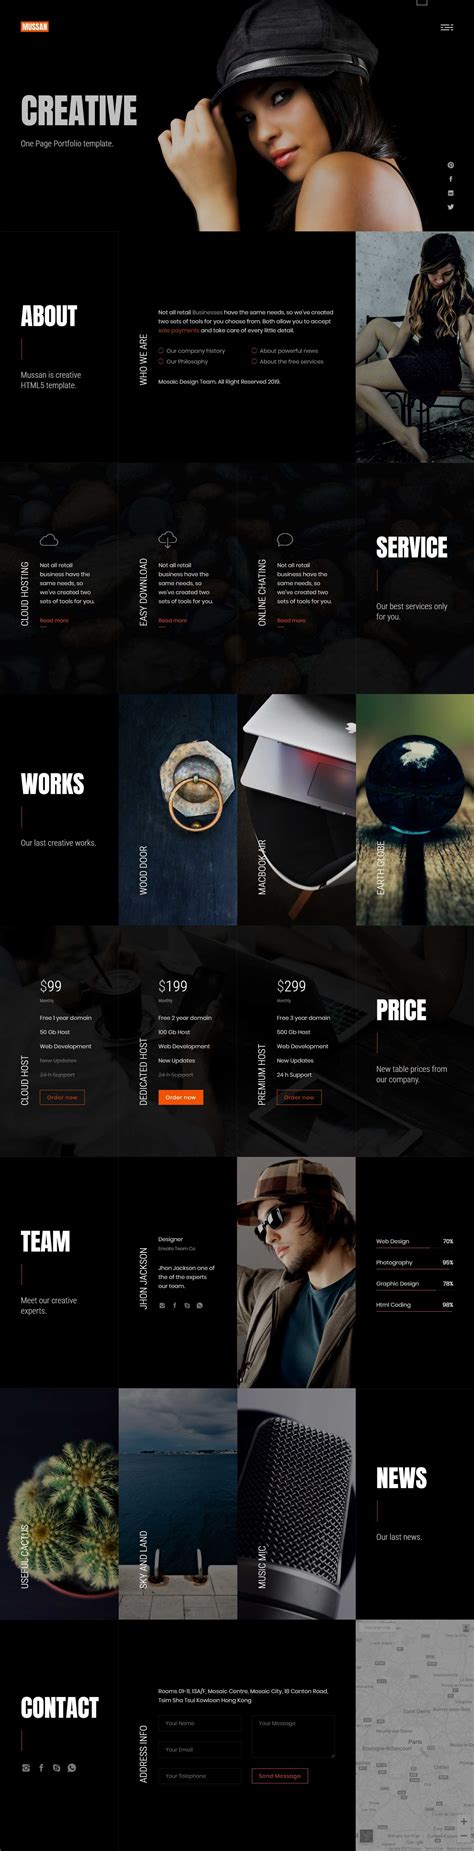 Mussan - Creative Agency Template | Creative agency, Creative web design, Creative portfolio